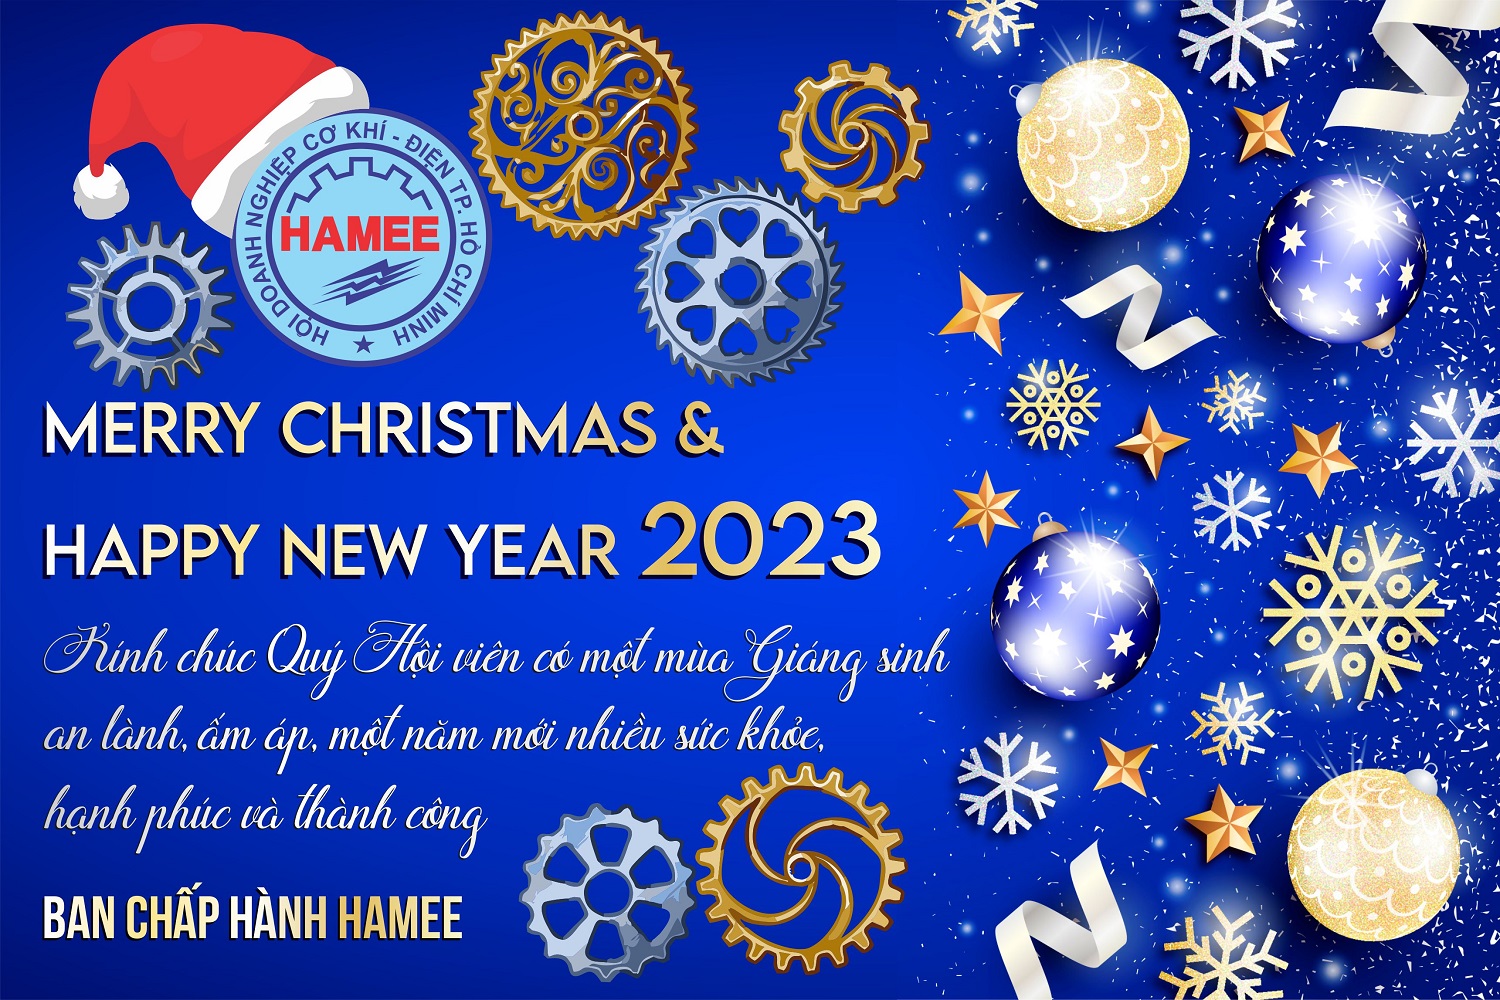 HAMEE 2023